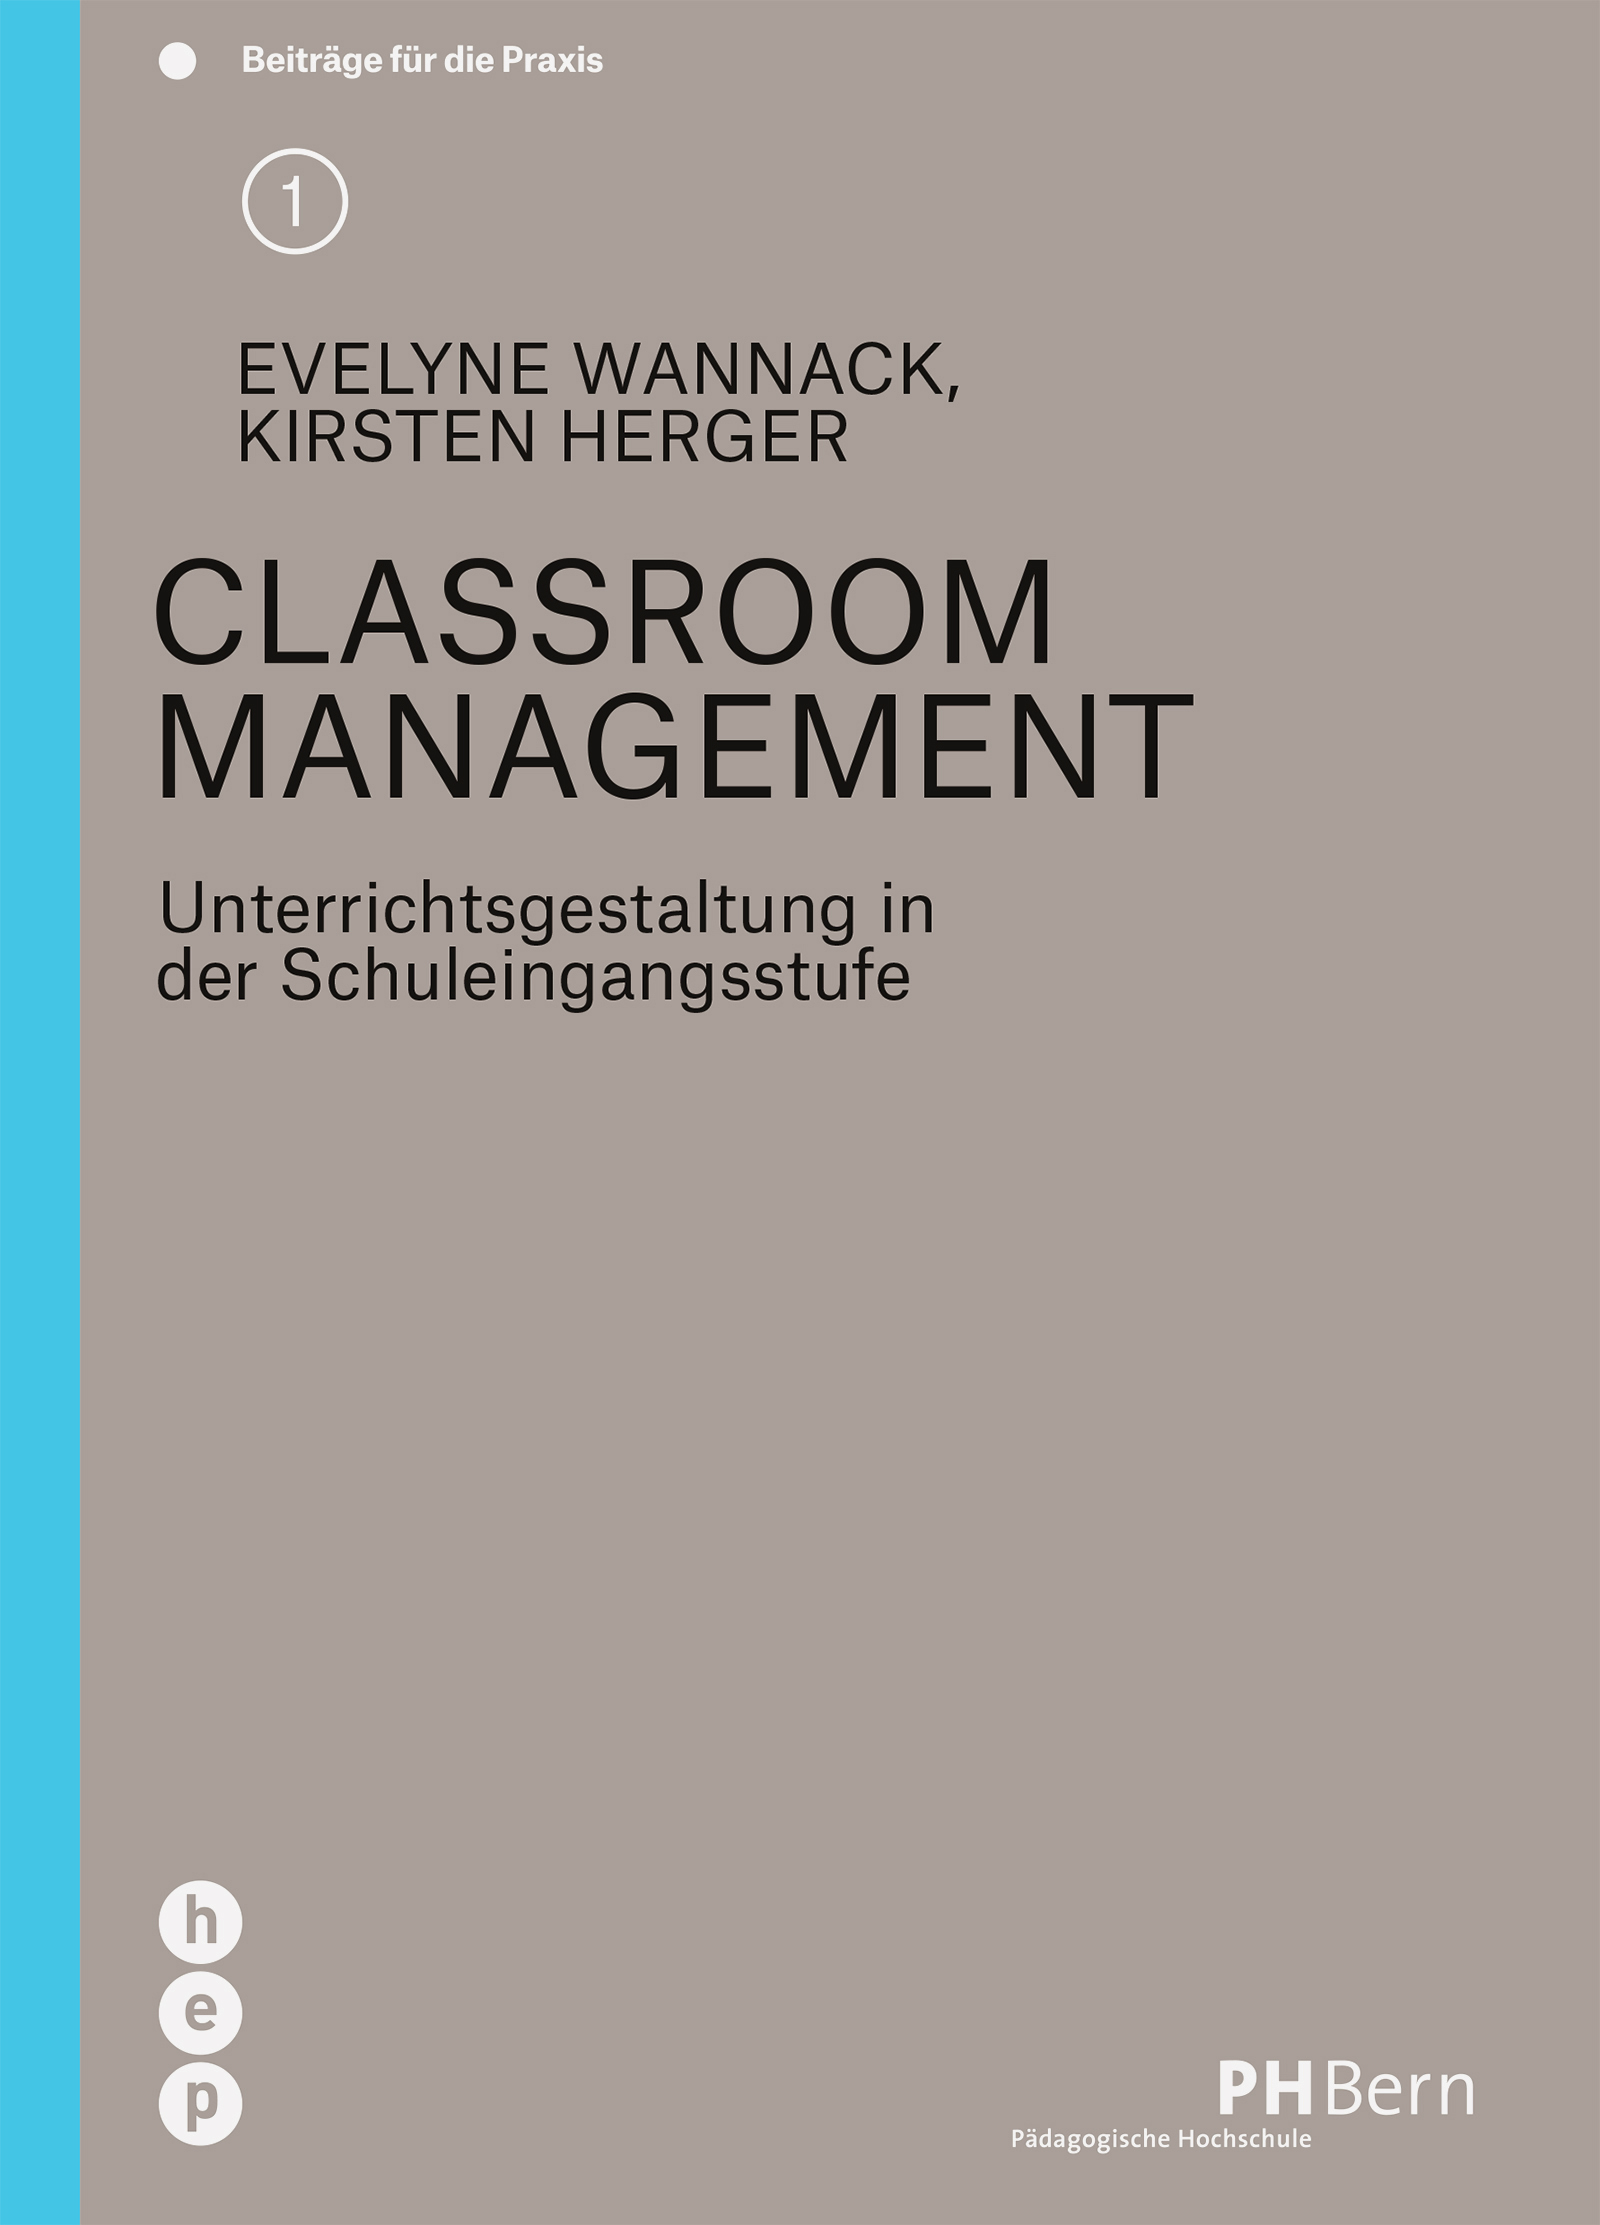 Produktabbildung von Classroom Management